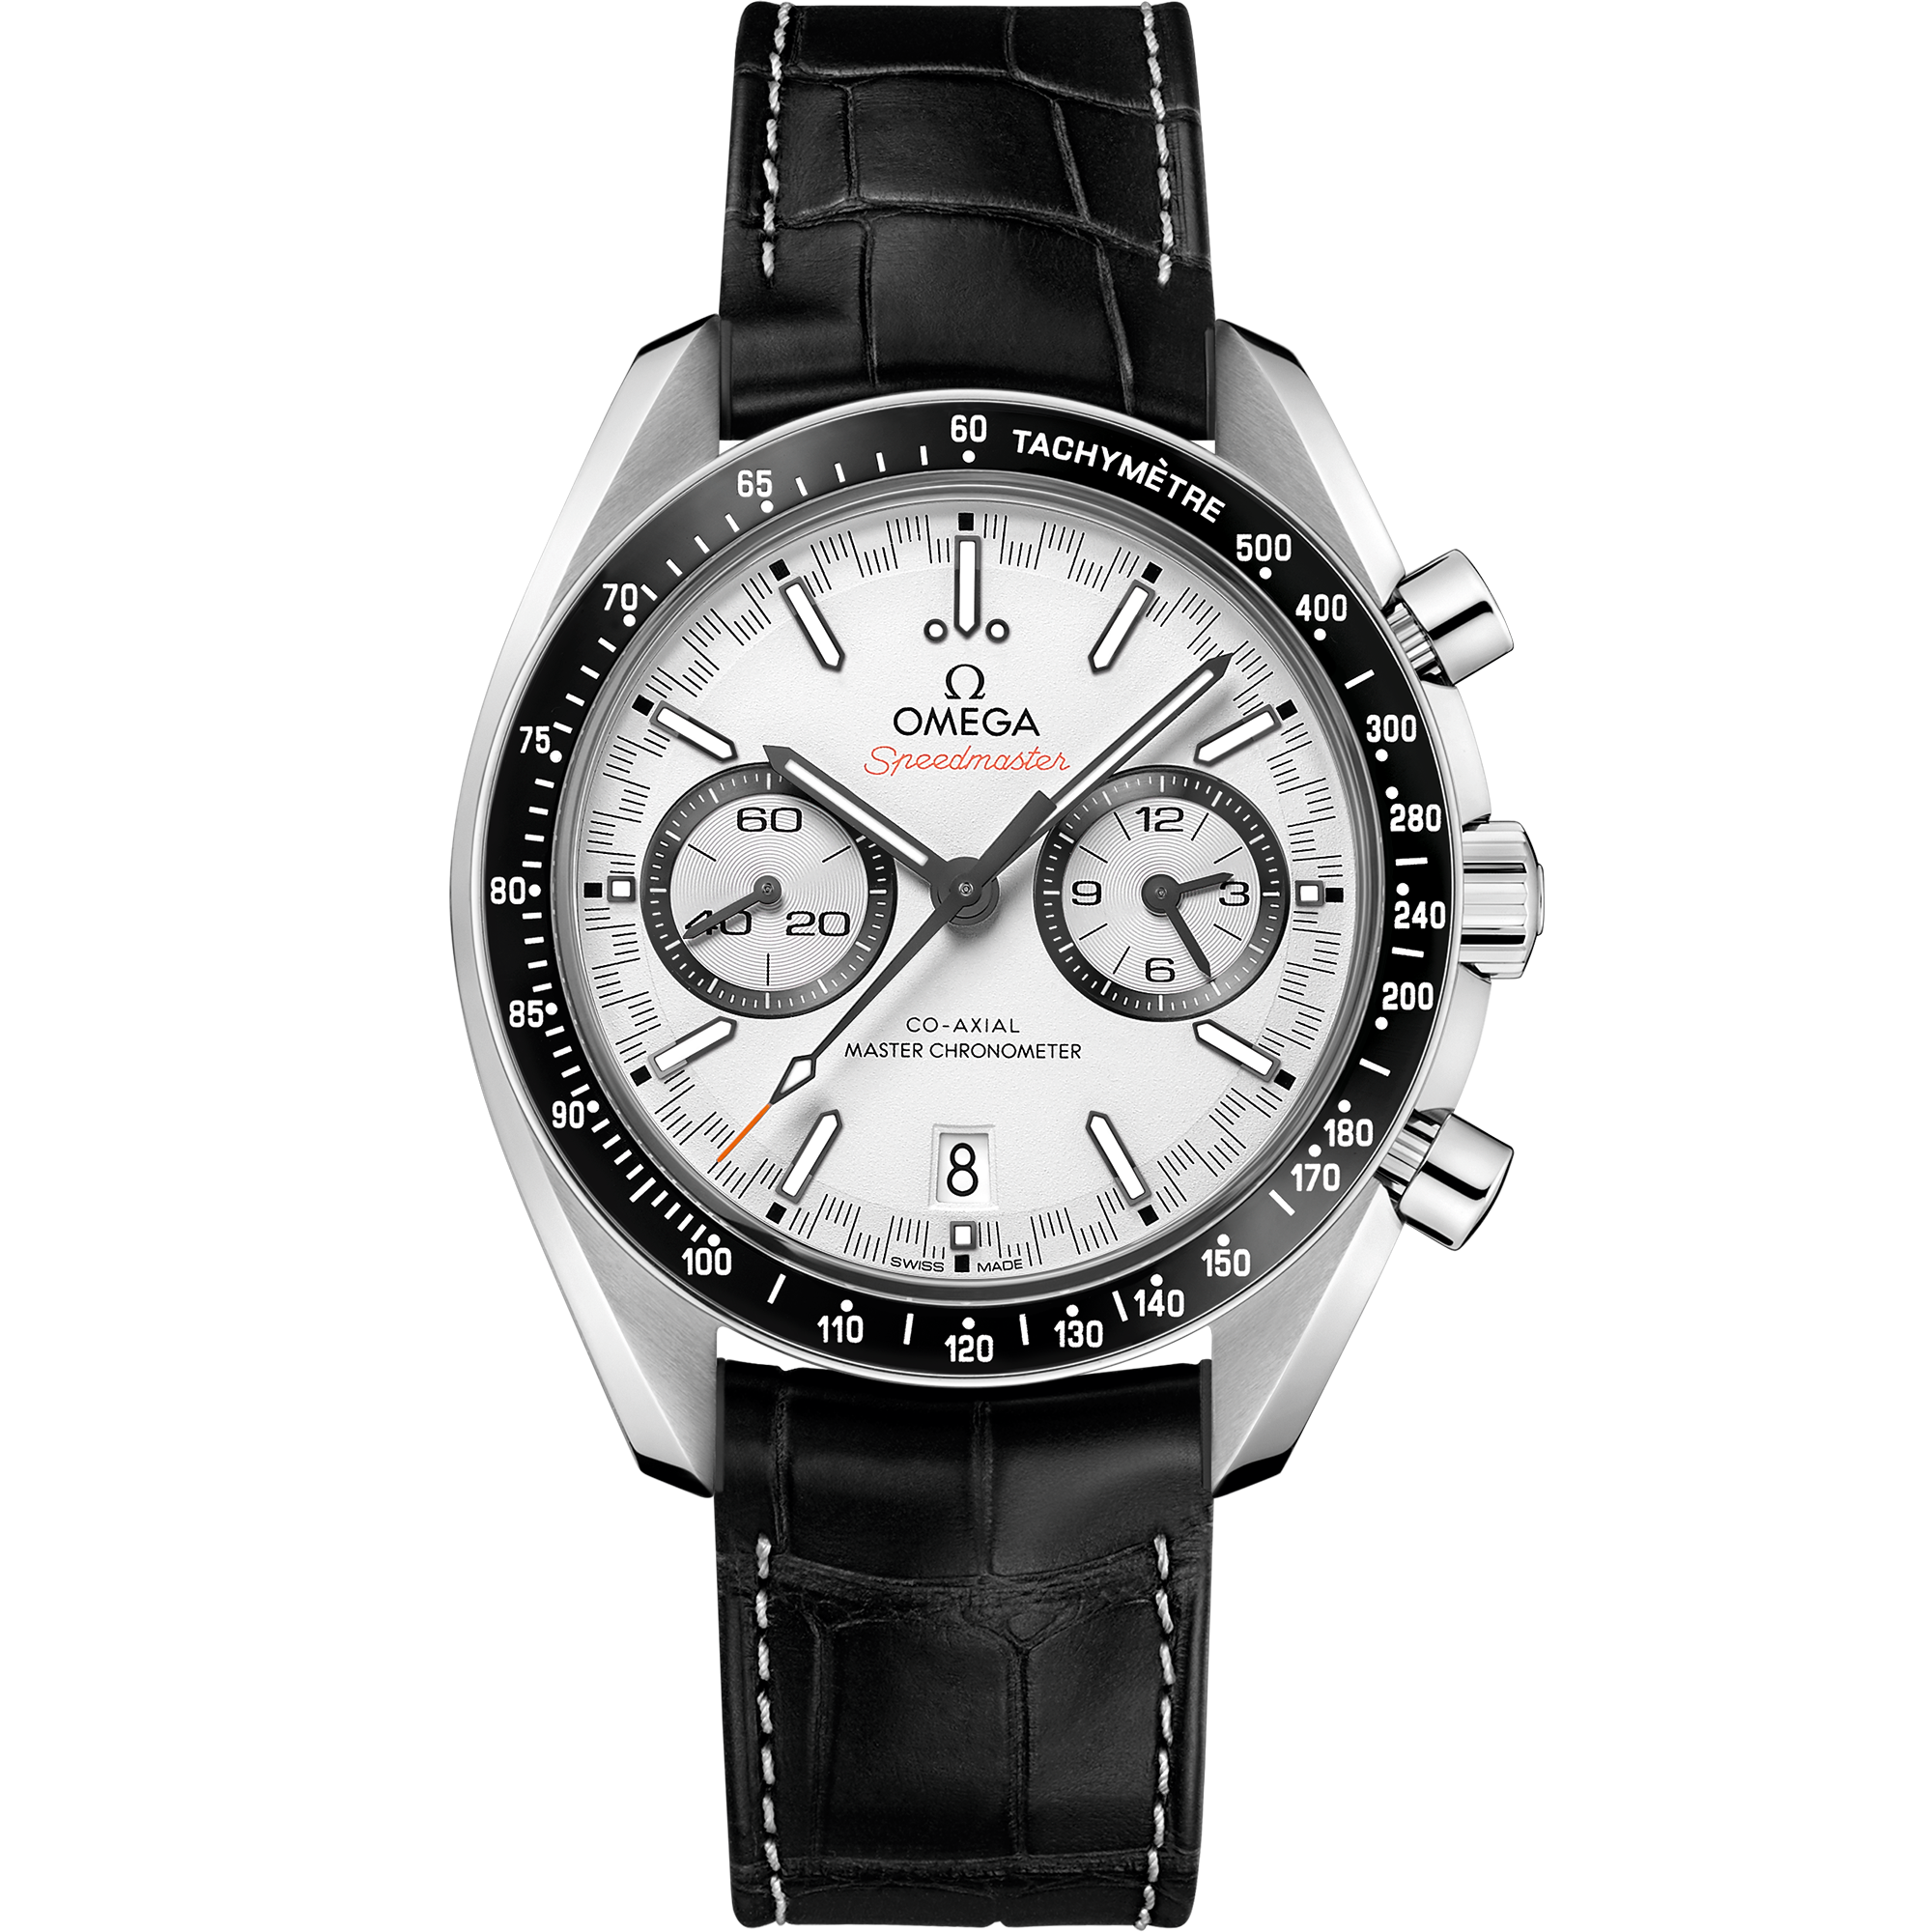 Racing Speedmaster Steel Chronograph Watch 329.30.44.51.04.001 | OMEGA US®